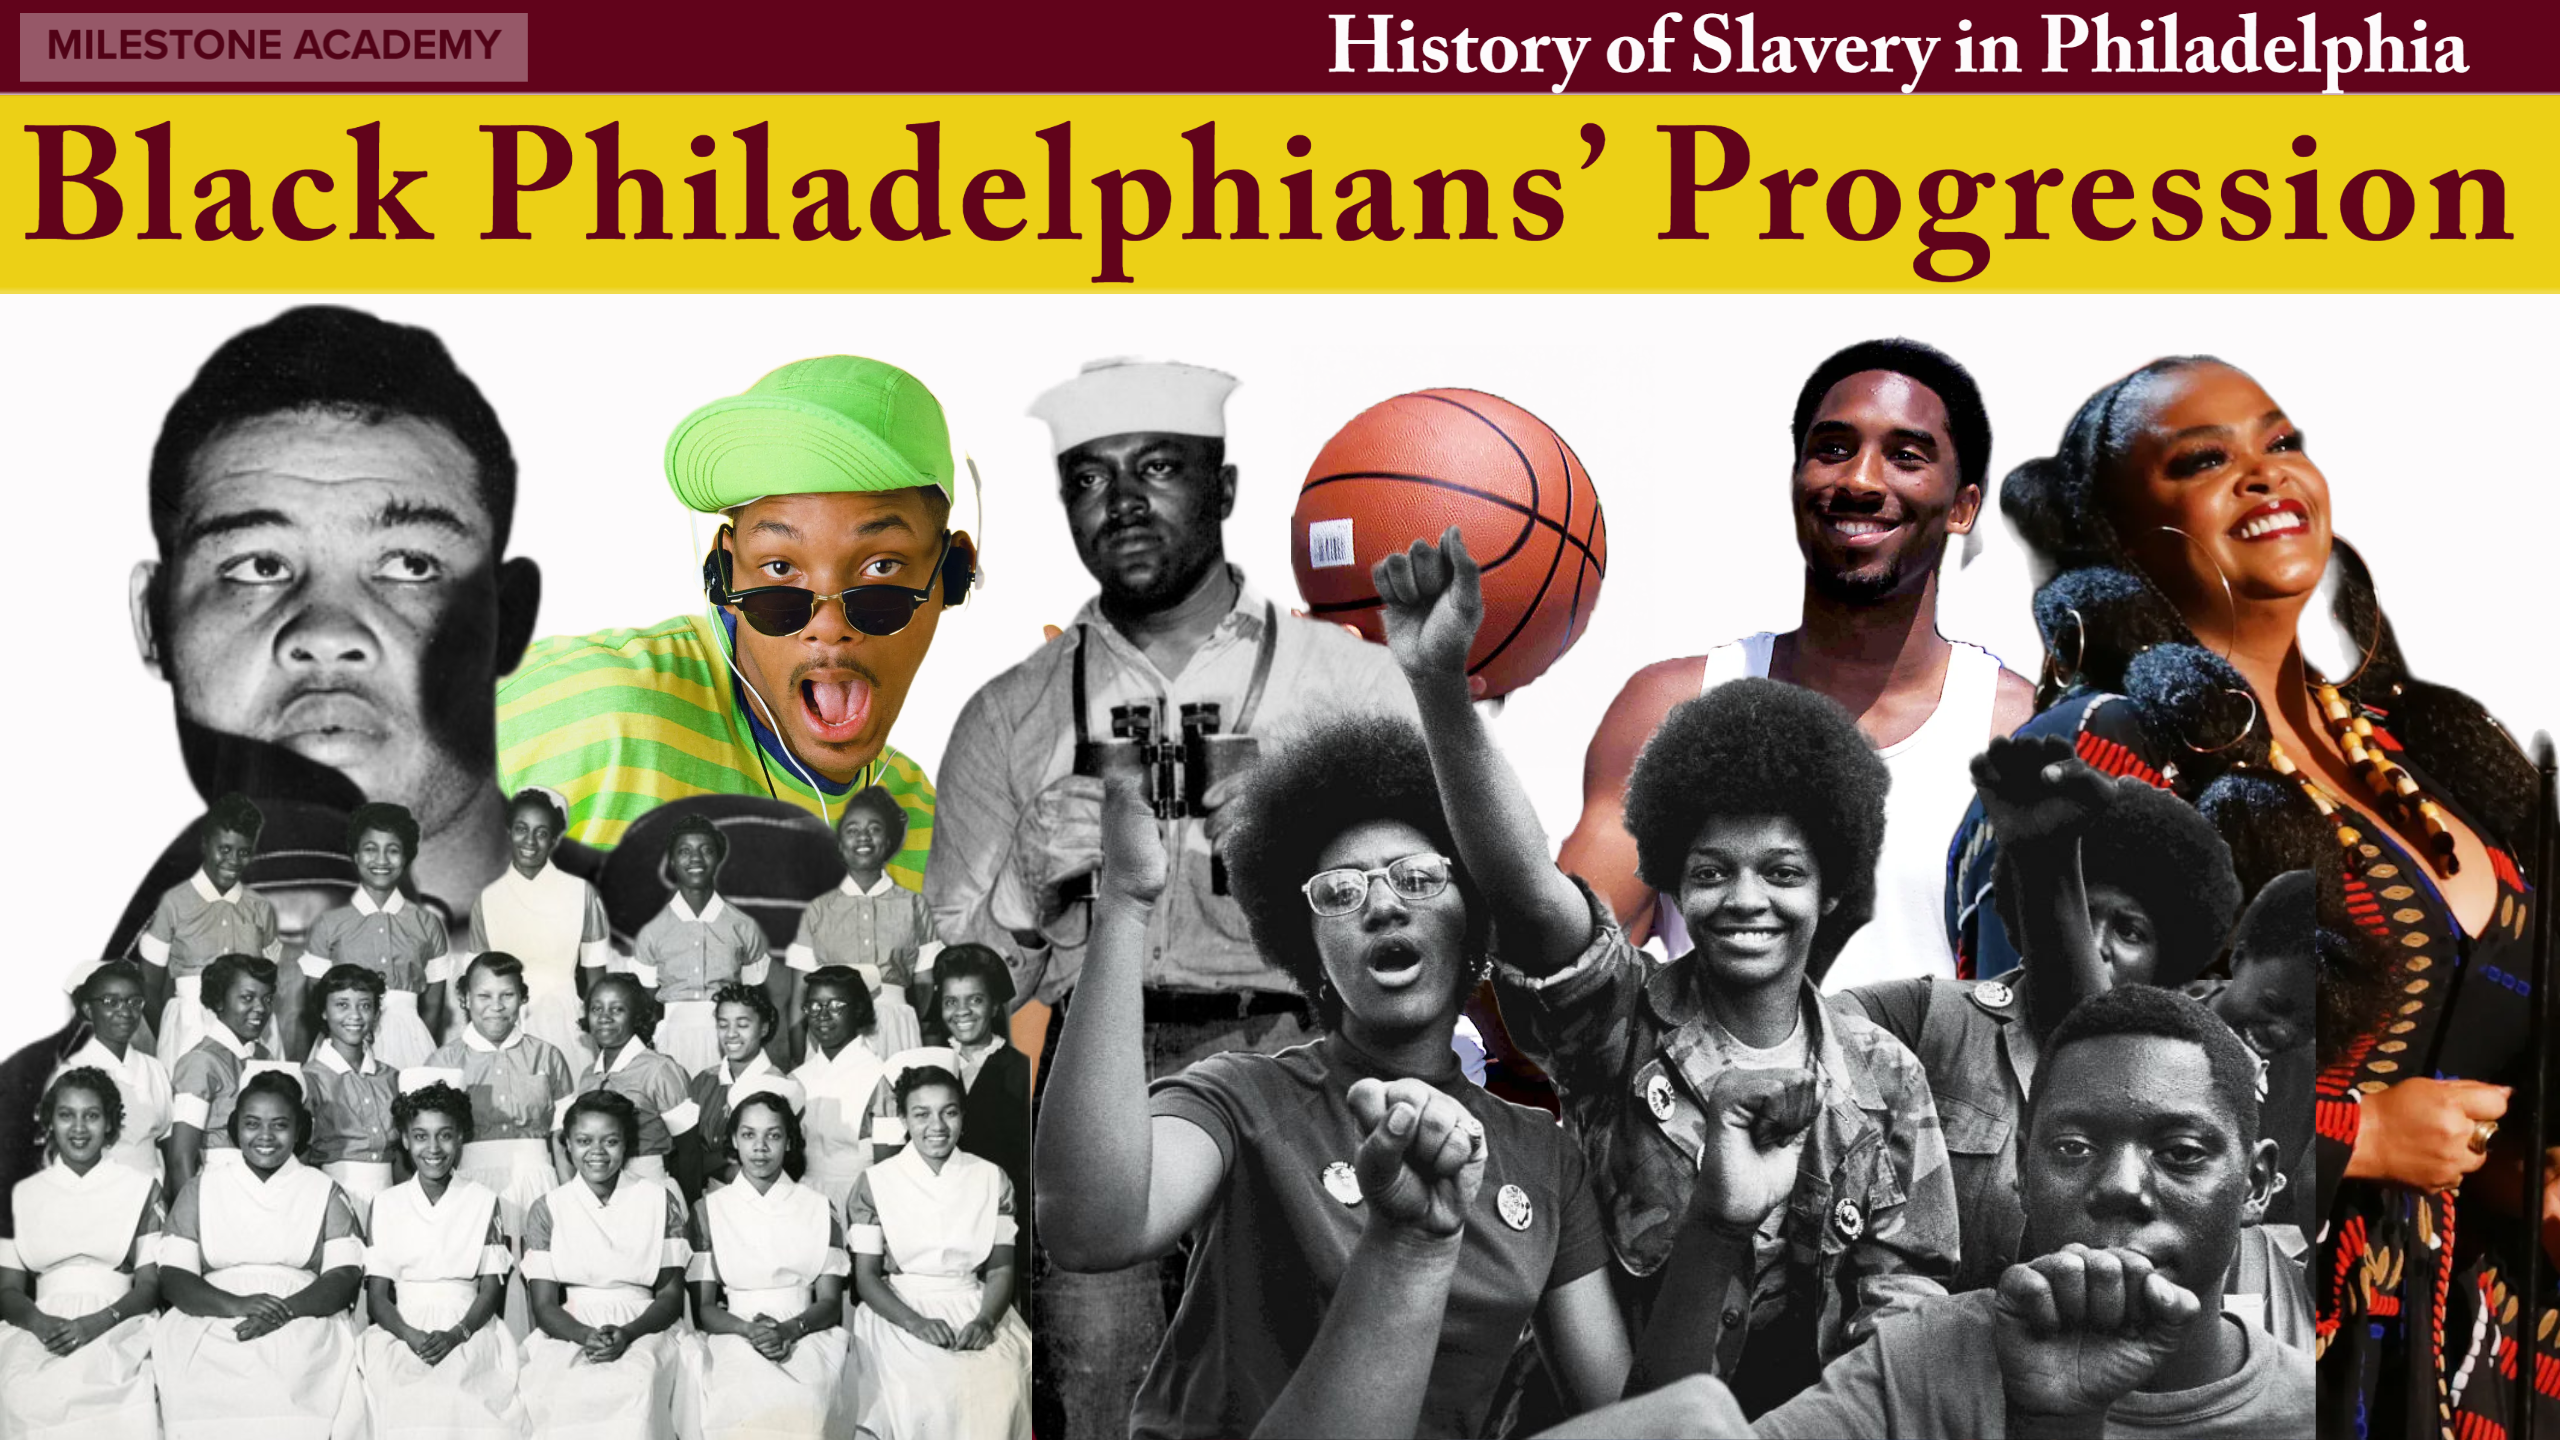 Black Philadelphians’ Progression History of Slavery in Philadelphia